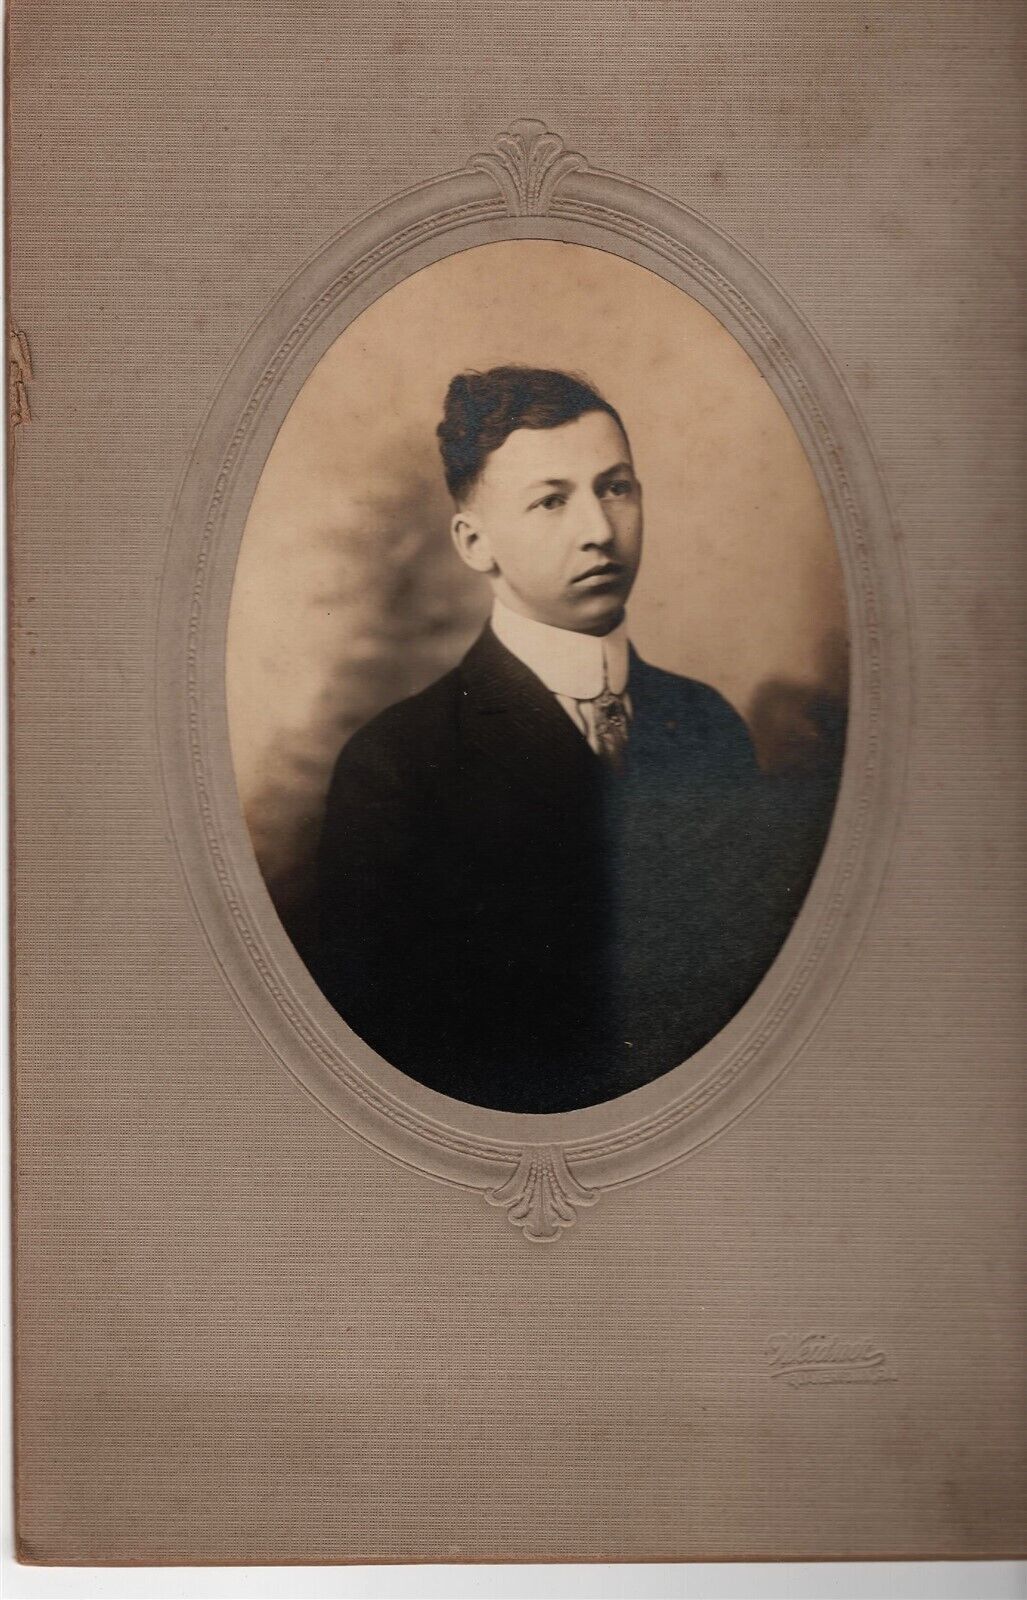 Antique Cabinet Card Photograph Man w/ Best Hair Tie Collar Ever ~Quakertown PA